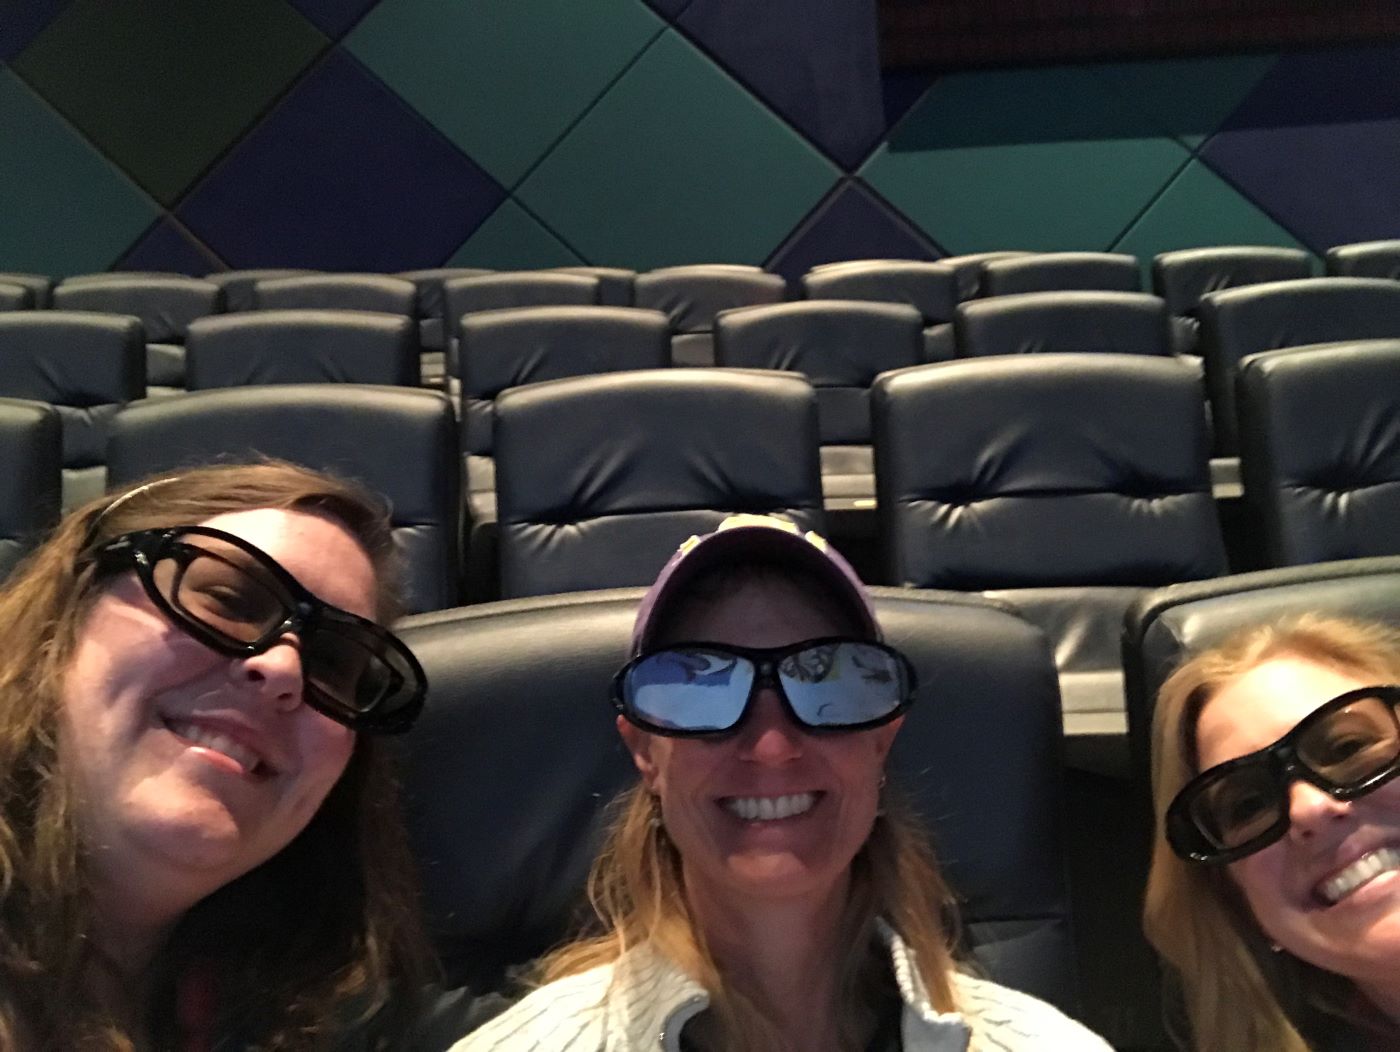 Karen, Karen Jr., and Julie in a movie theater